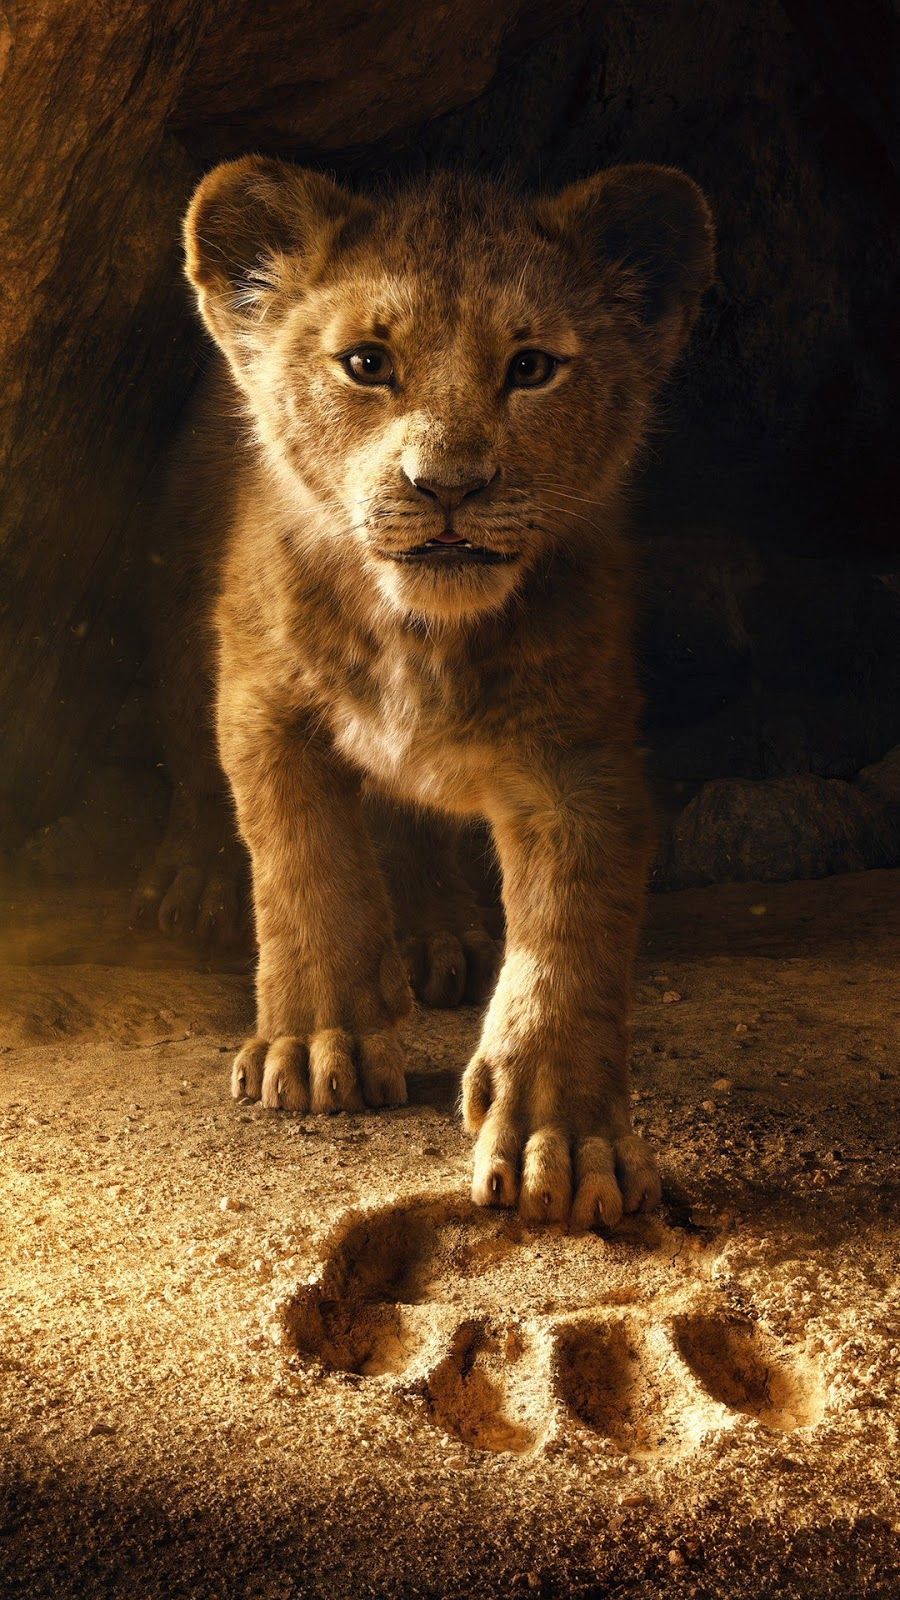 The Lion King 2019 wallpaper for mobile